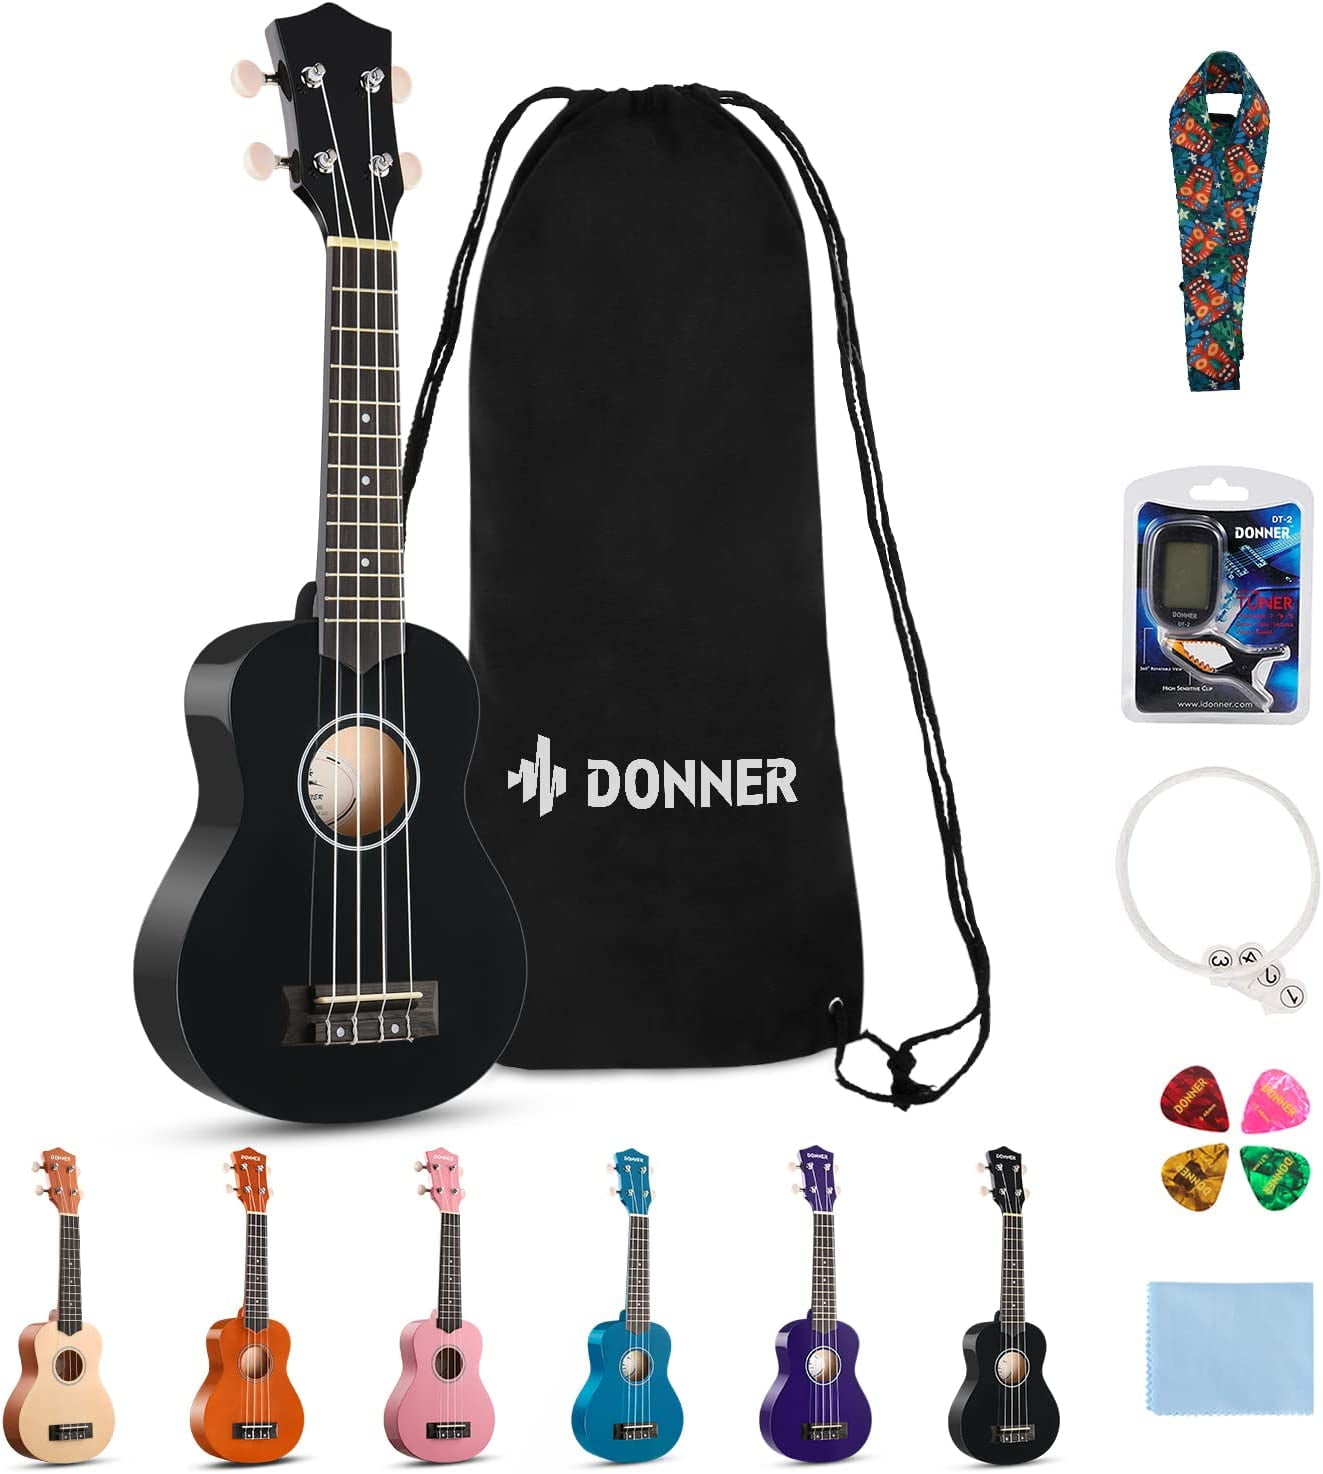 Donner Soprano Ukulele Beginner Kit for Kid Adult Student with Online Lesson Inch Ukelele Bundle Bag Strap String Tuner Pick Polishing Cloth, Rainbow Series-Black Color DUS-10D - Walmart.com